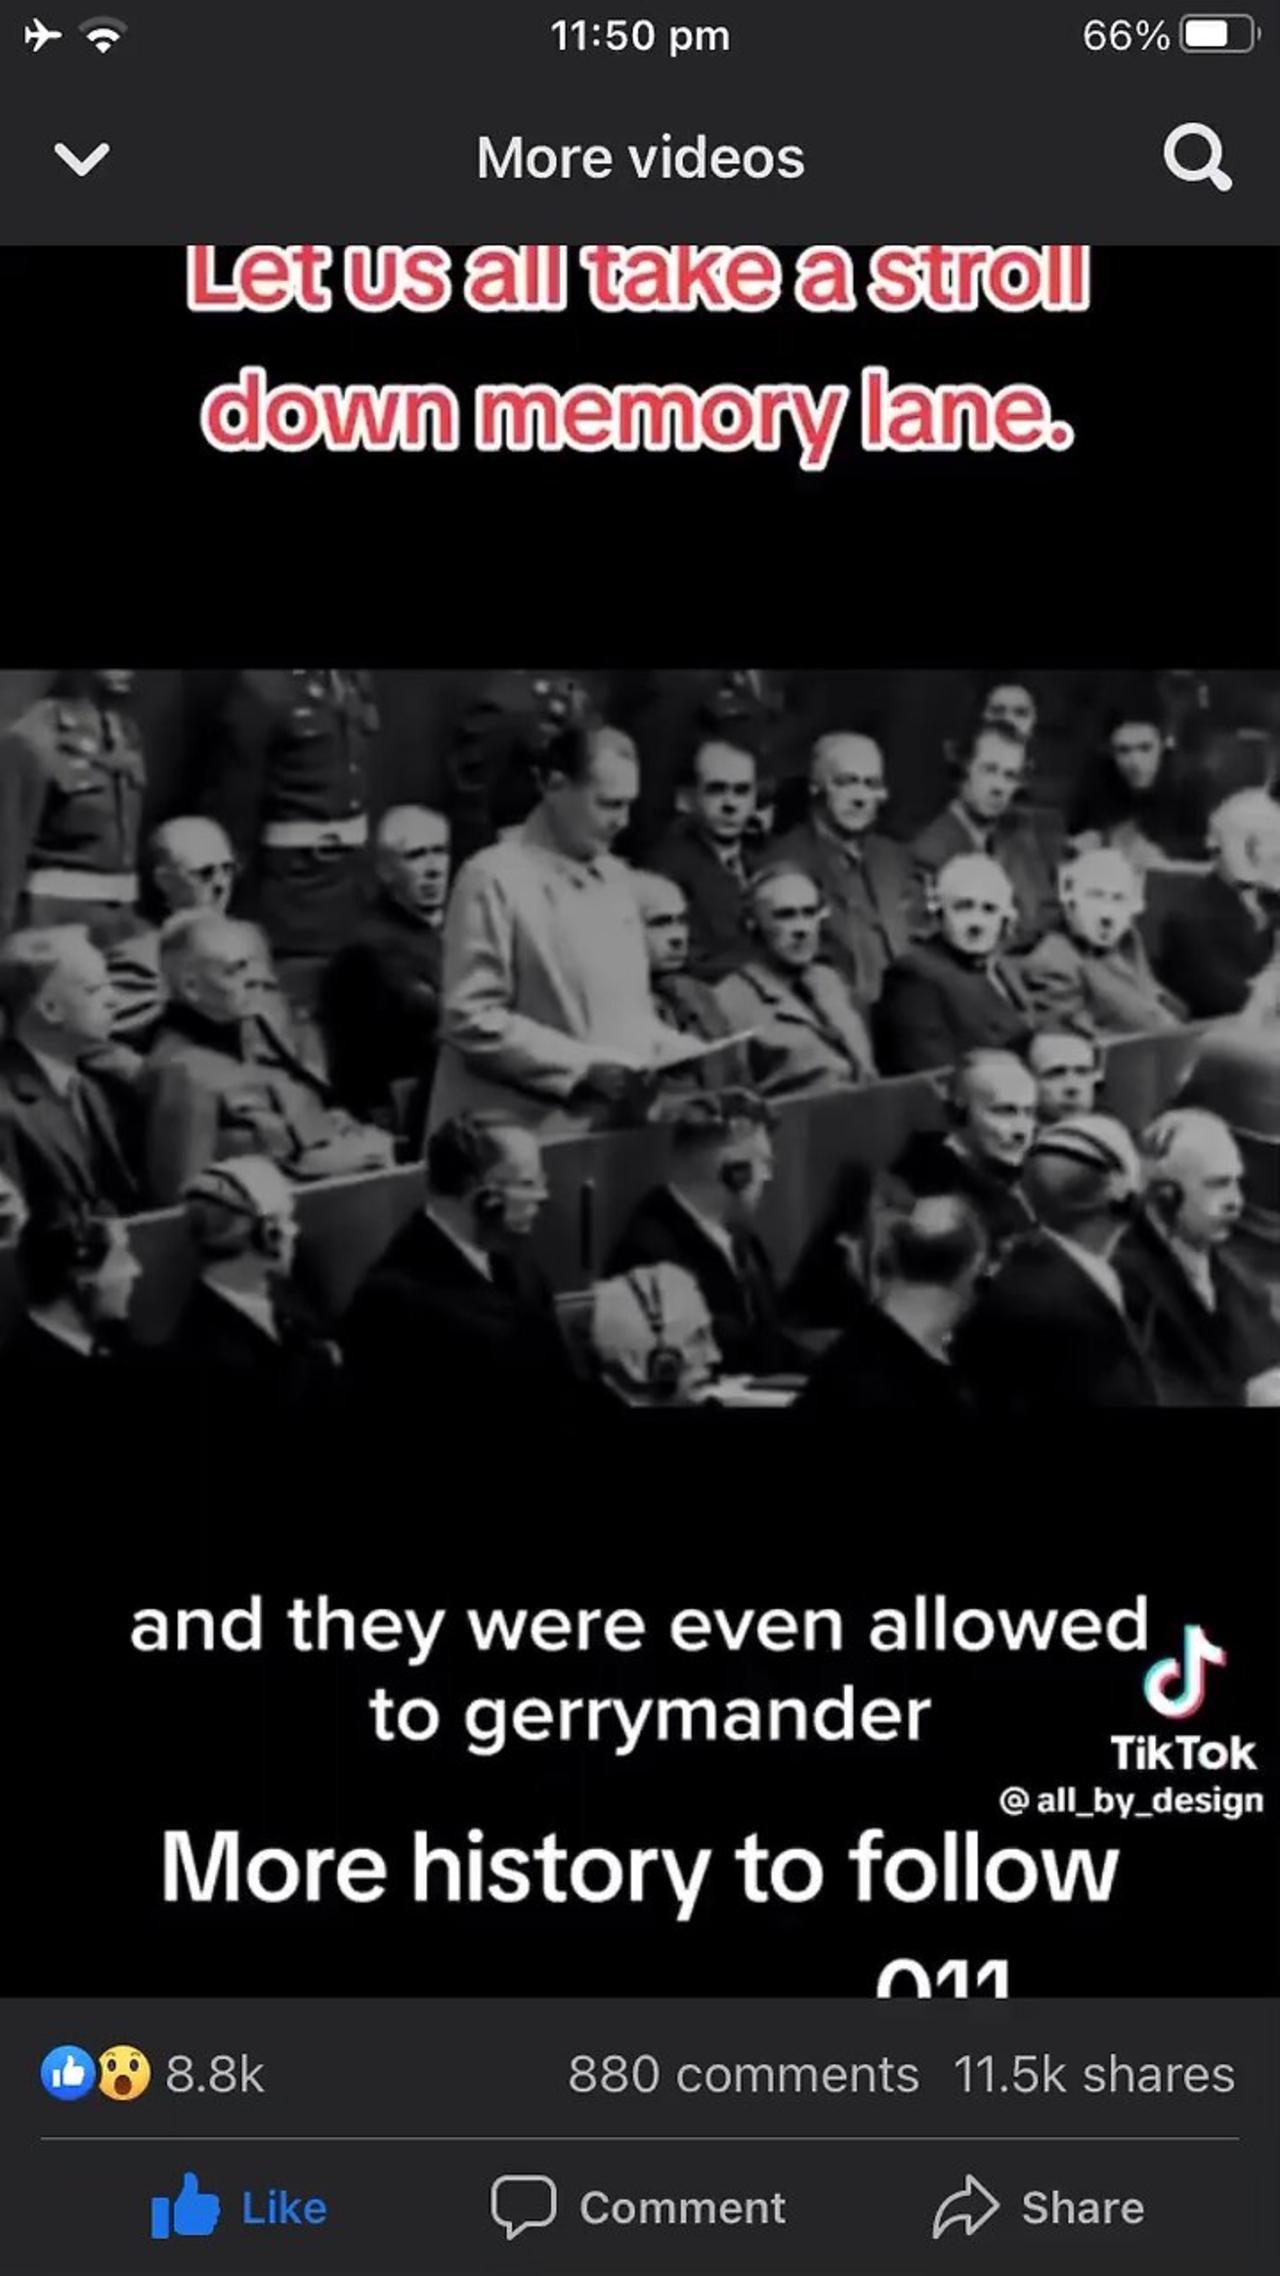 Nuremberg trials